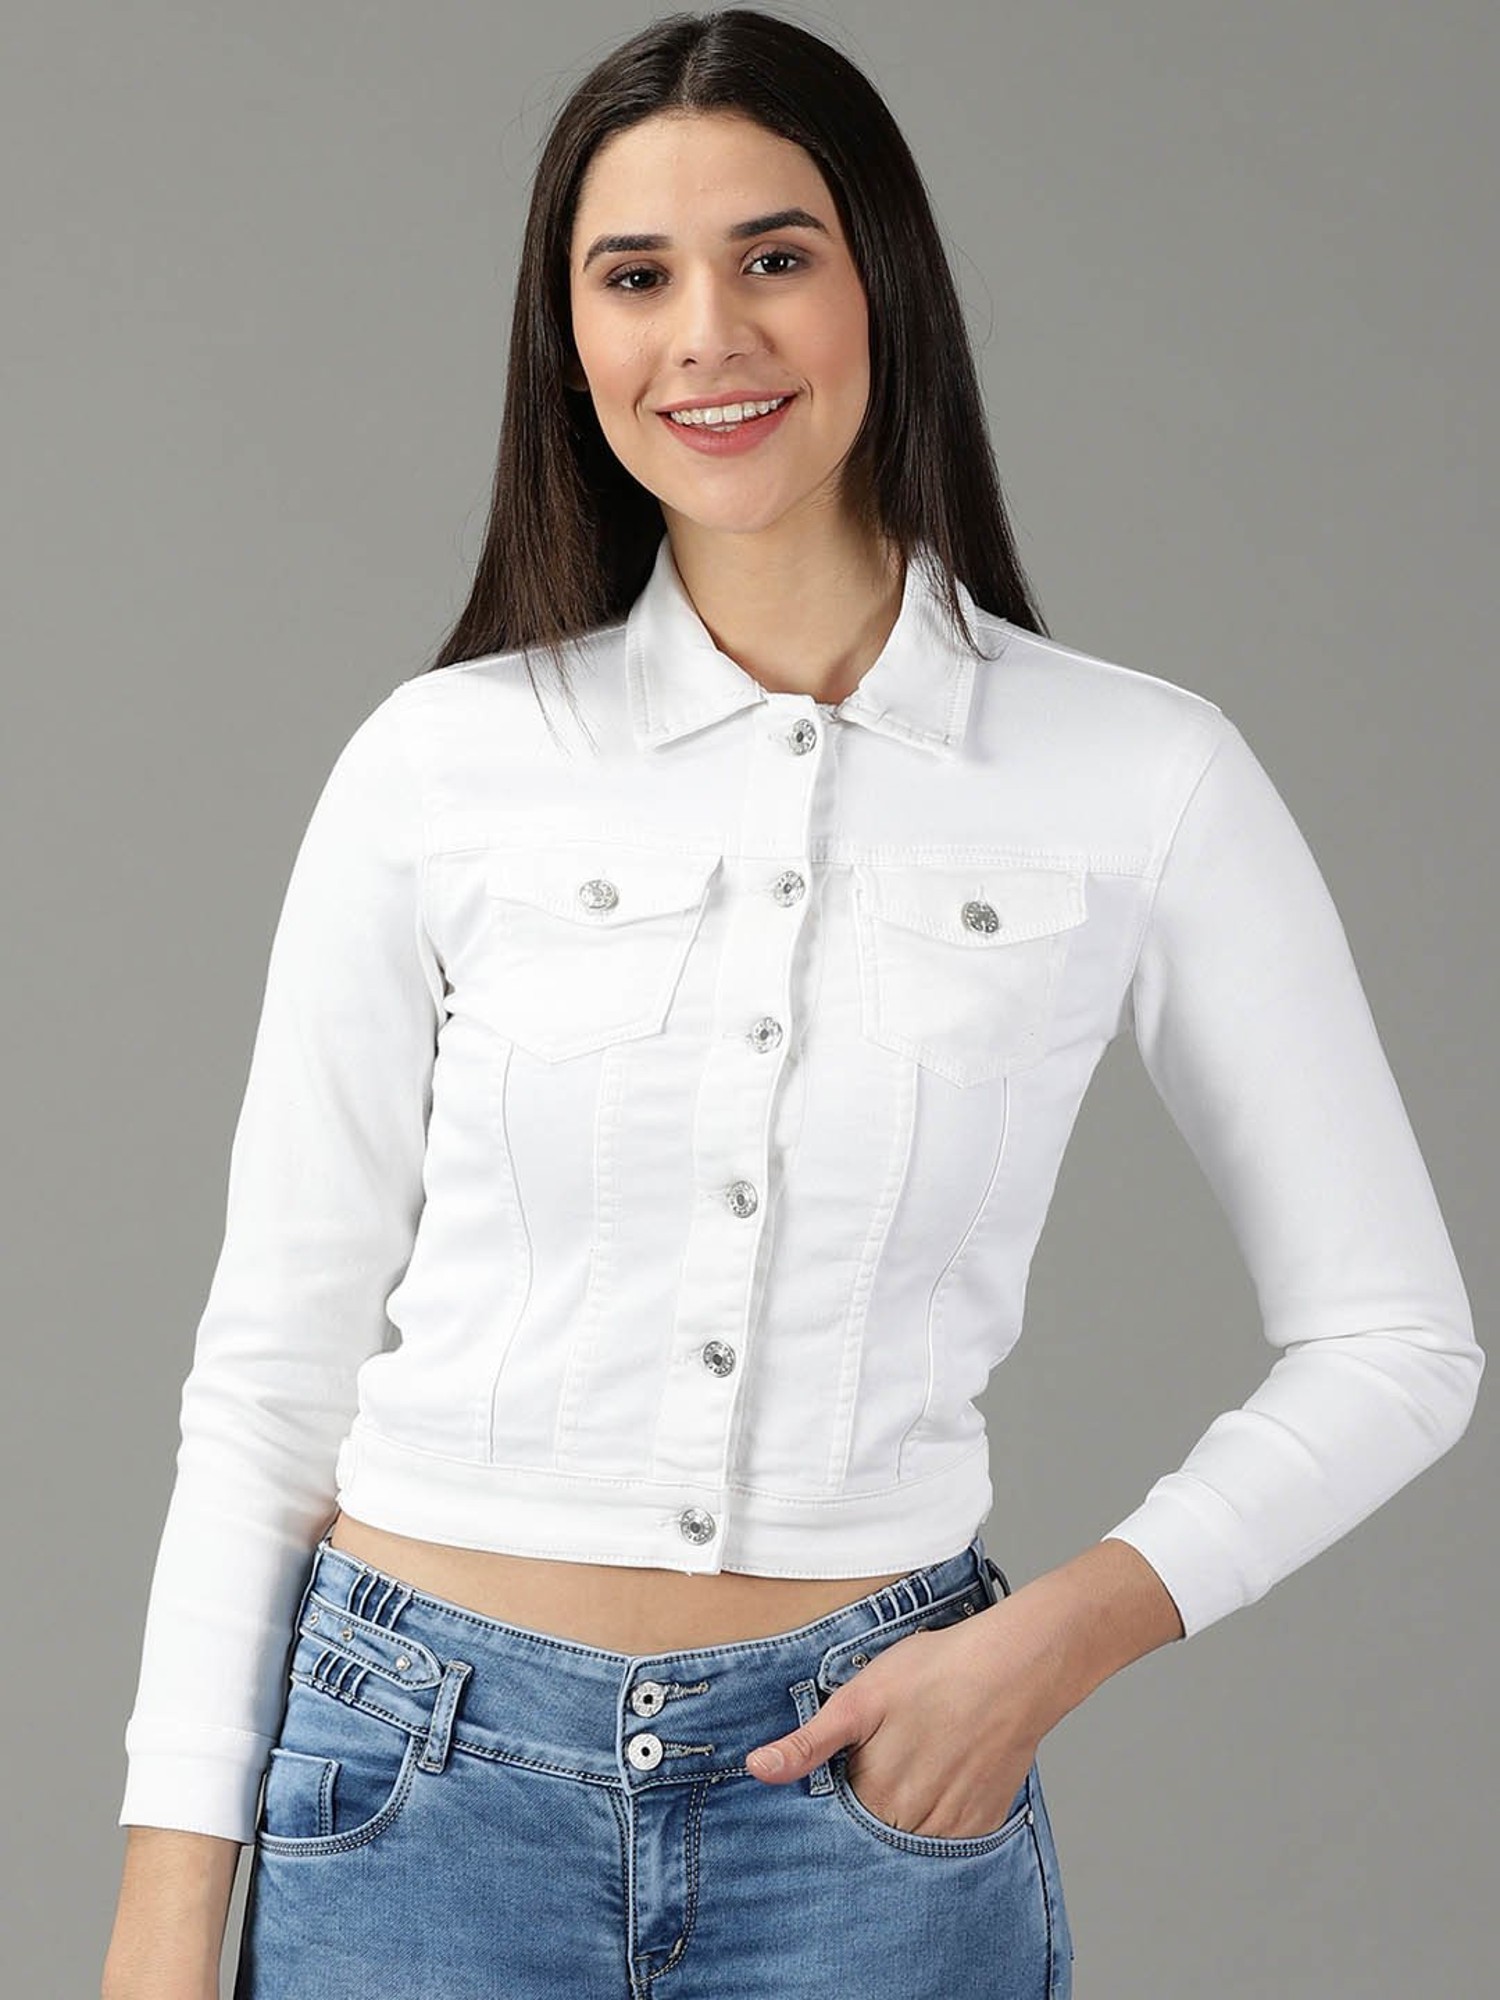 10 Best Ways to Wear White Denim Jacket for Women - FMag.com